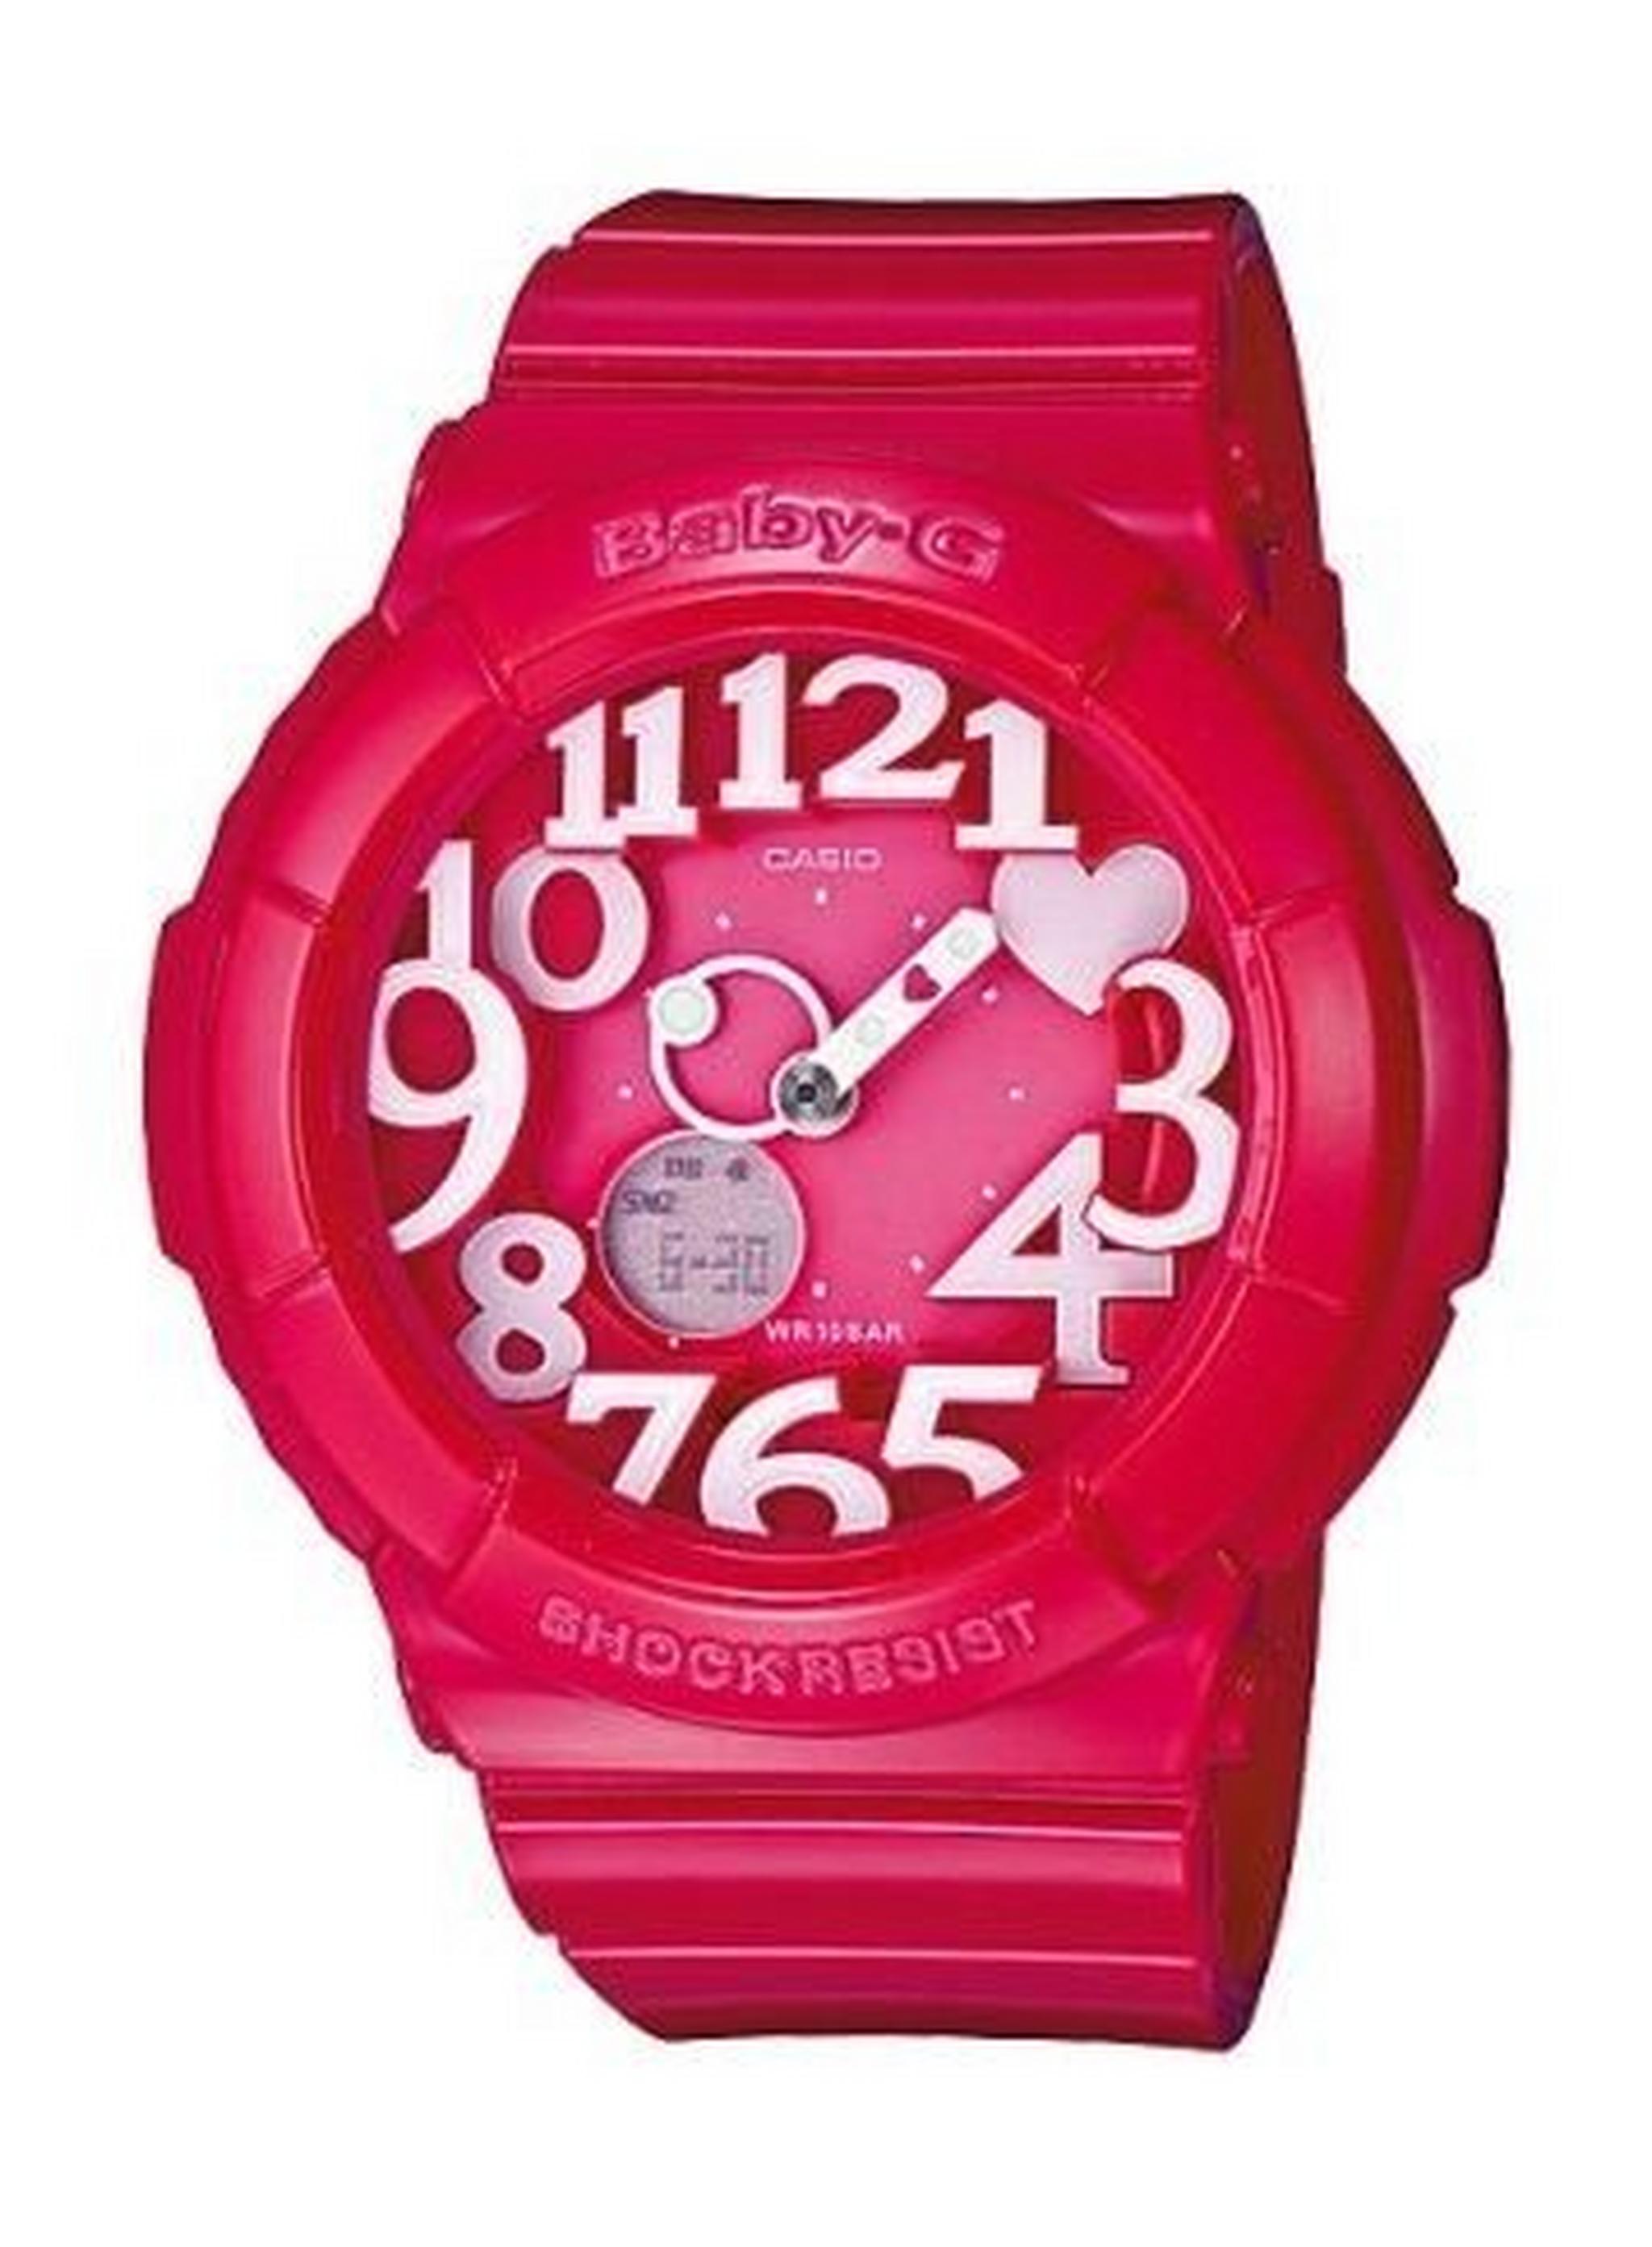 Casio Baby-G Wrist Sports Watch For Women (BGA-130-4BDR)